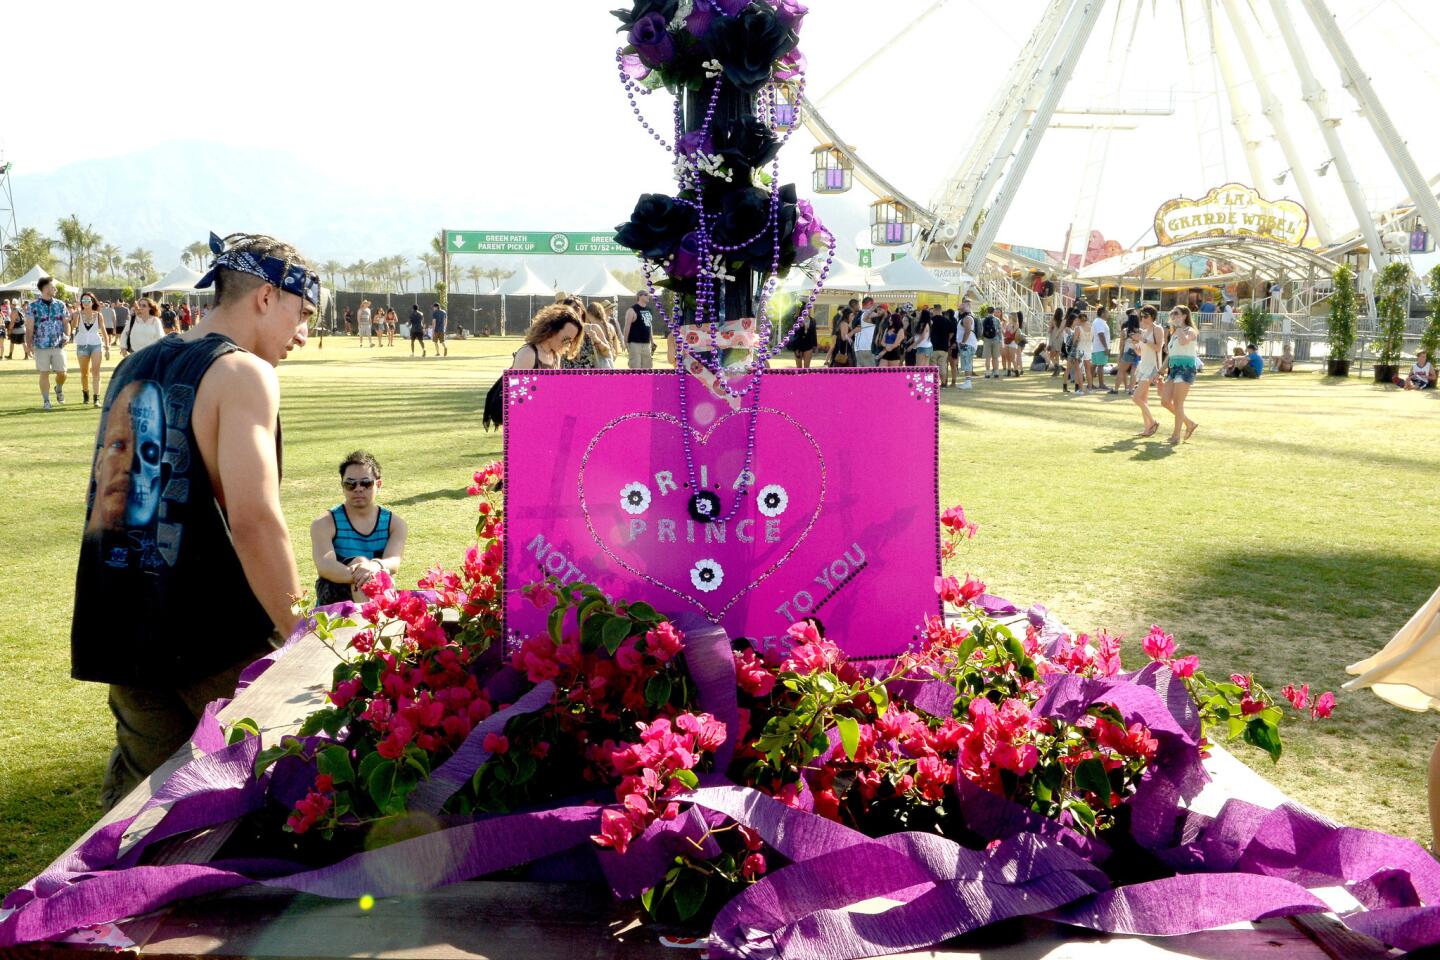 Remembering Prince at Coachella